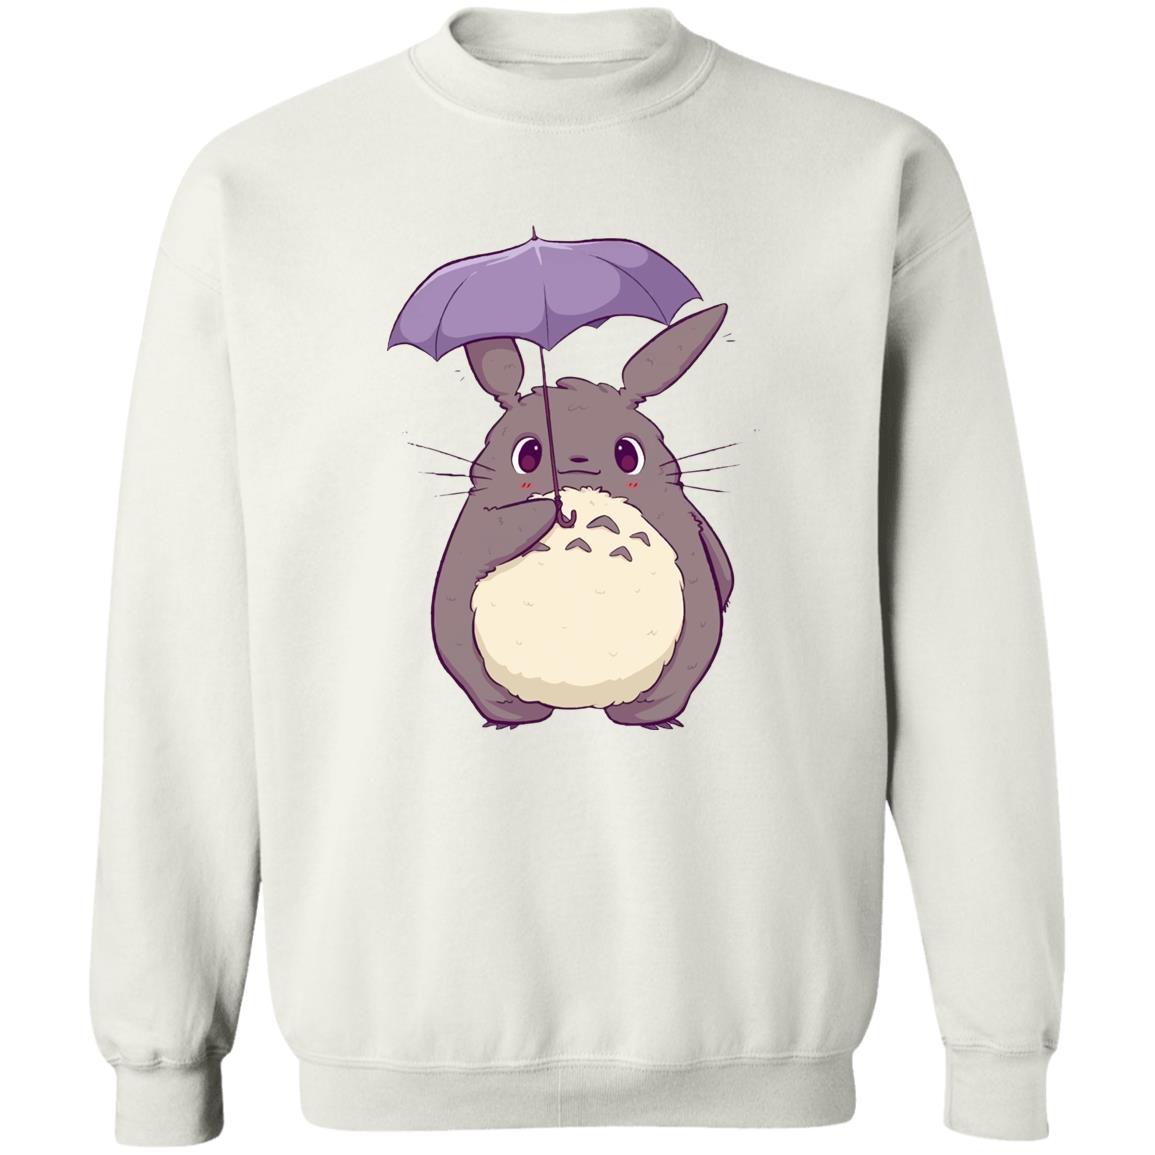 Totoro and Umbrella Cute Sweatshirt